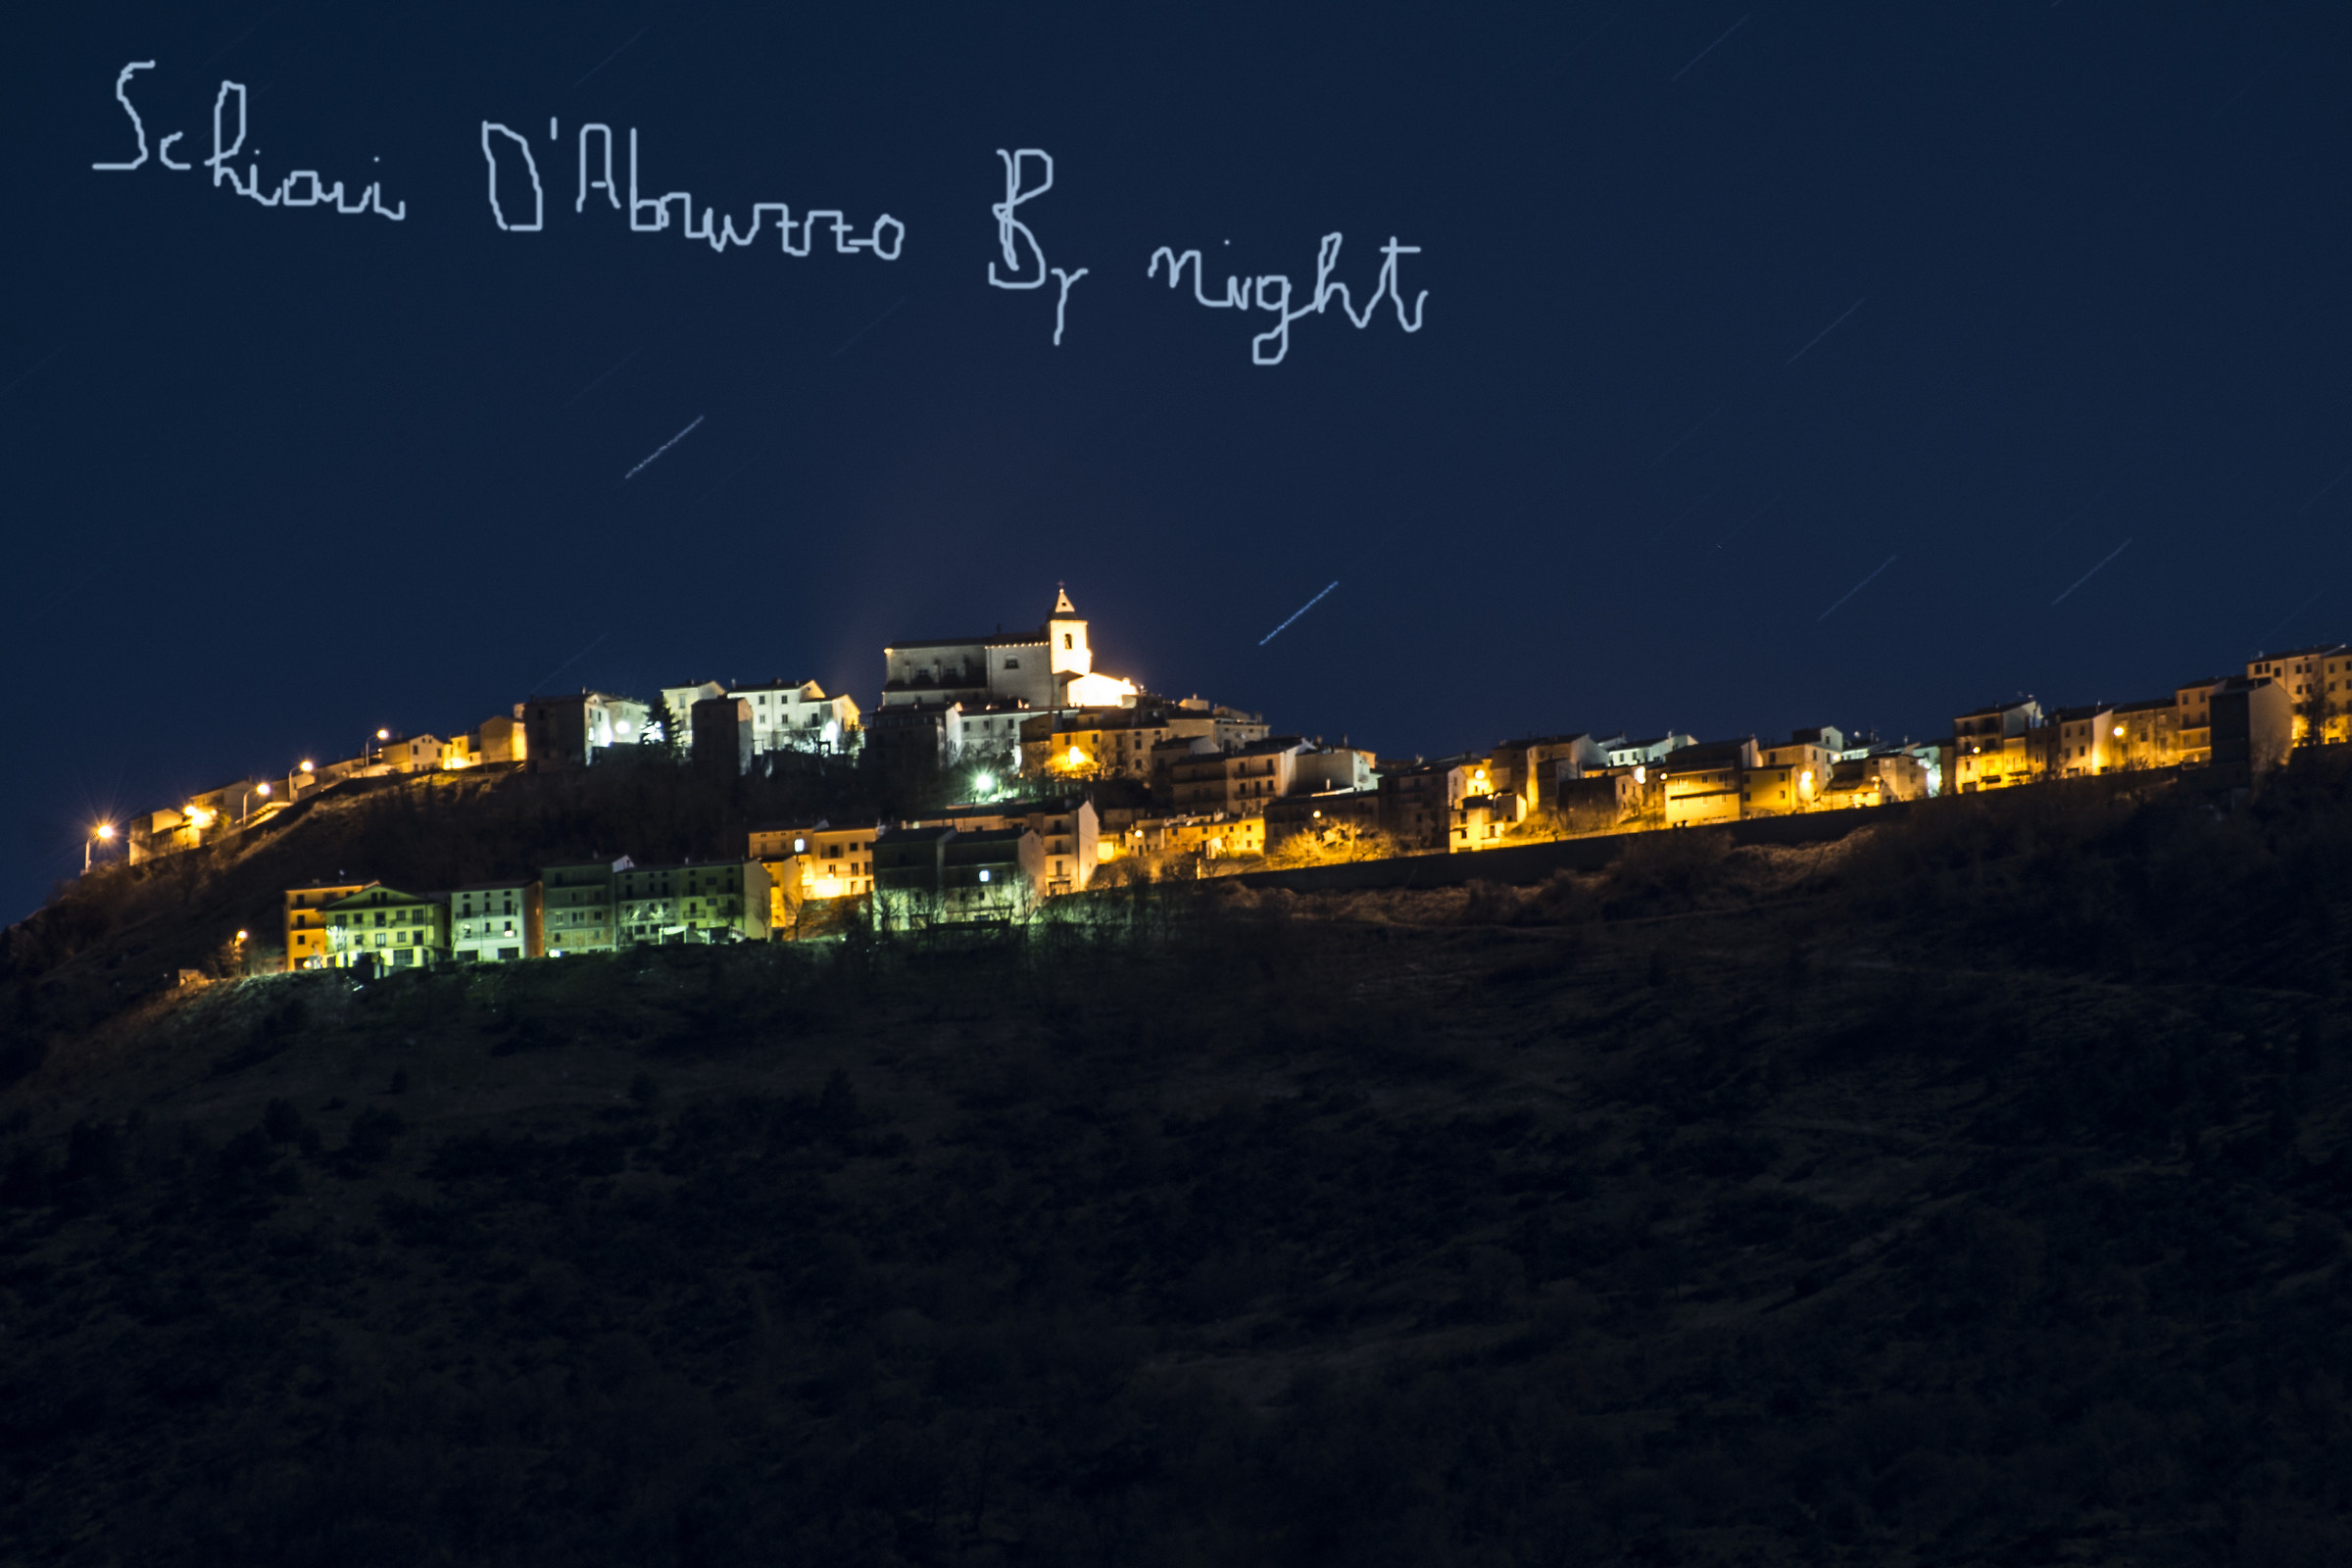 Schiavi D'Abruzzo By night...